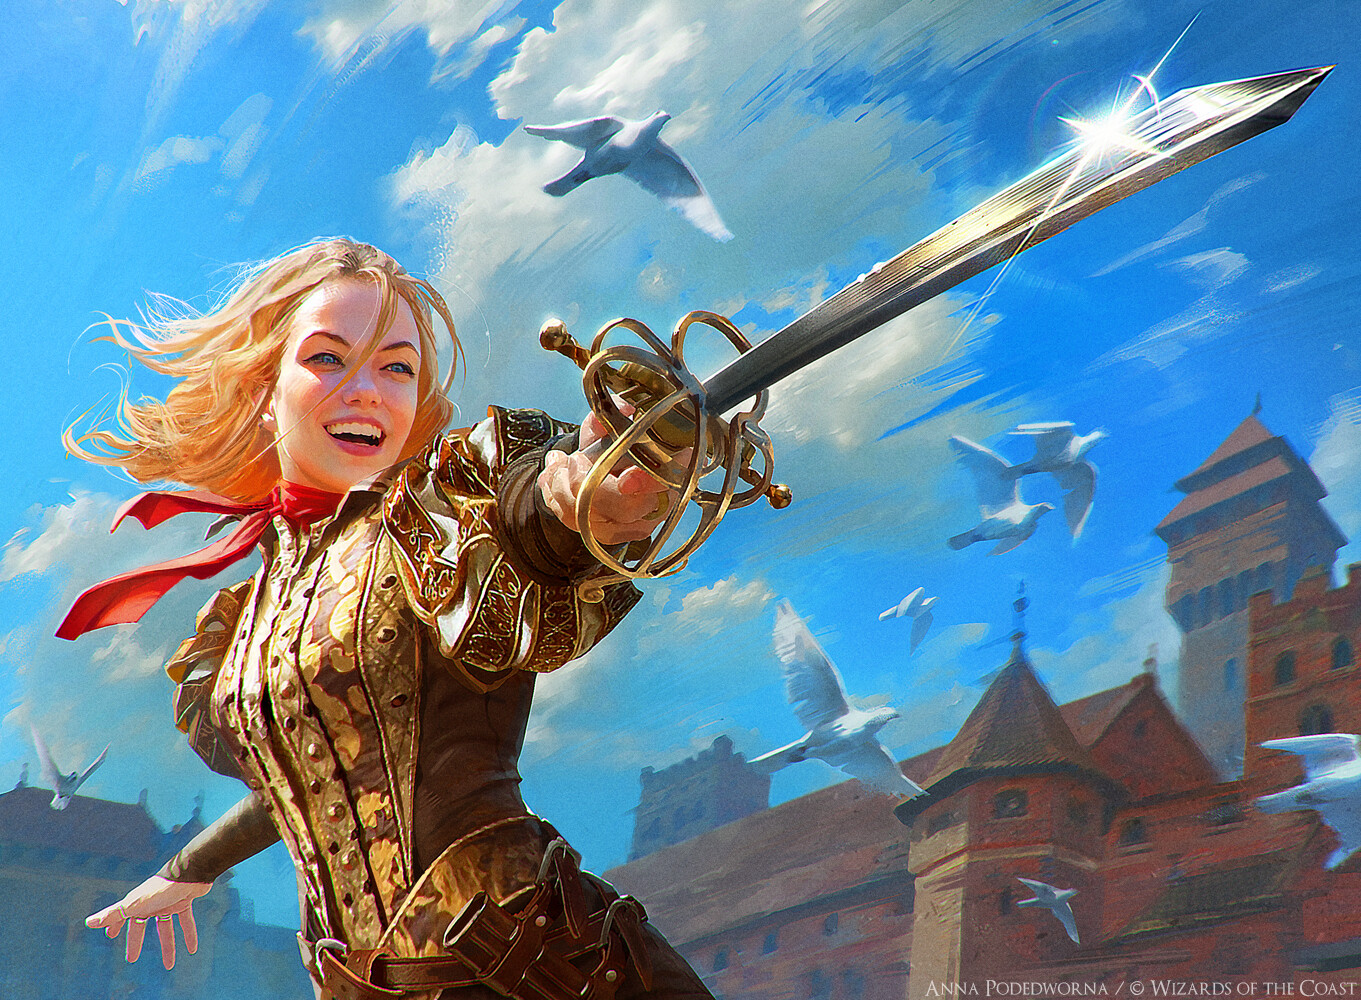 General 1361x1000 Anna Podedworna artwork women fantasy art fantasy girl sword weapon blonde women with swords rapier